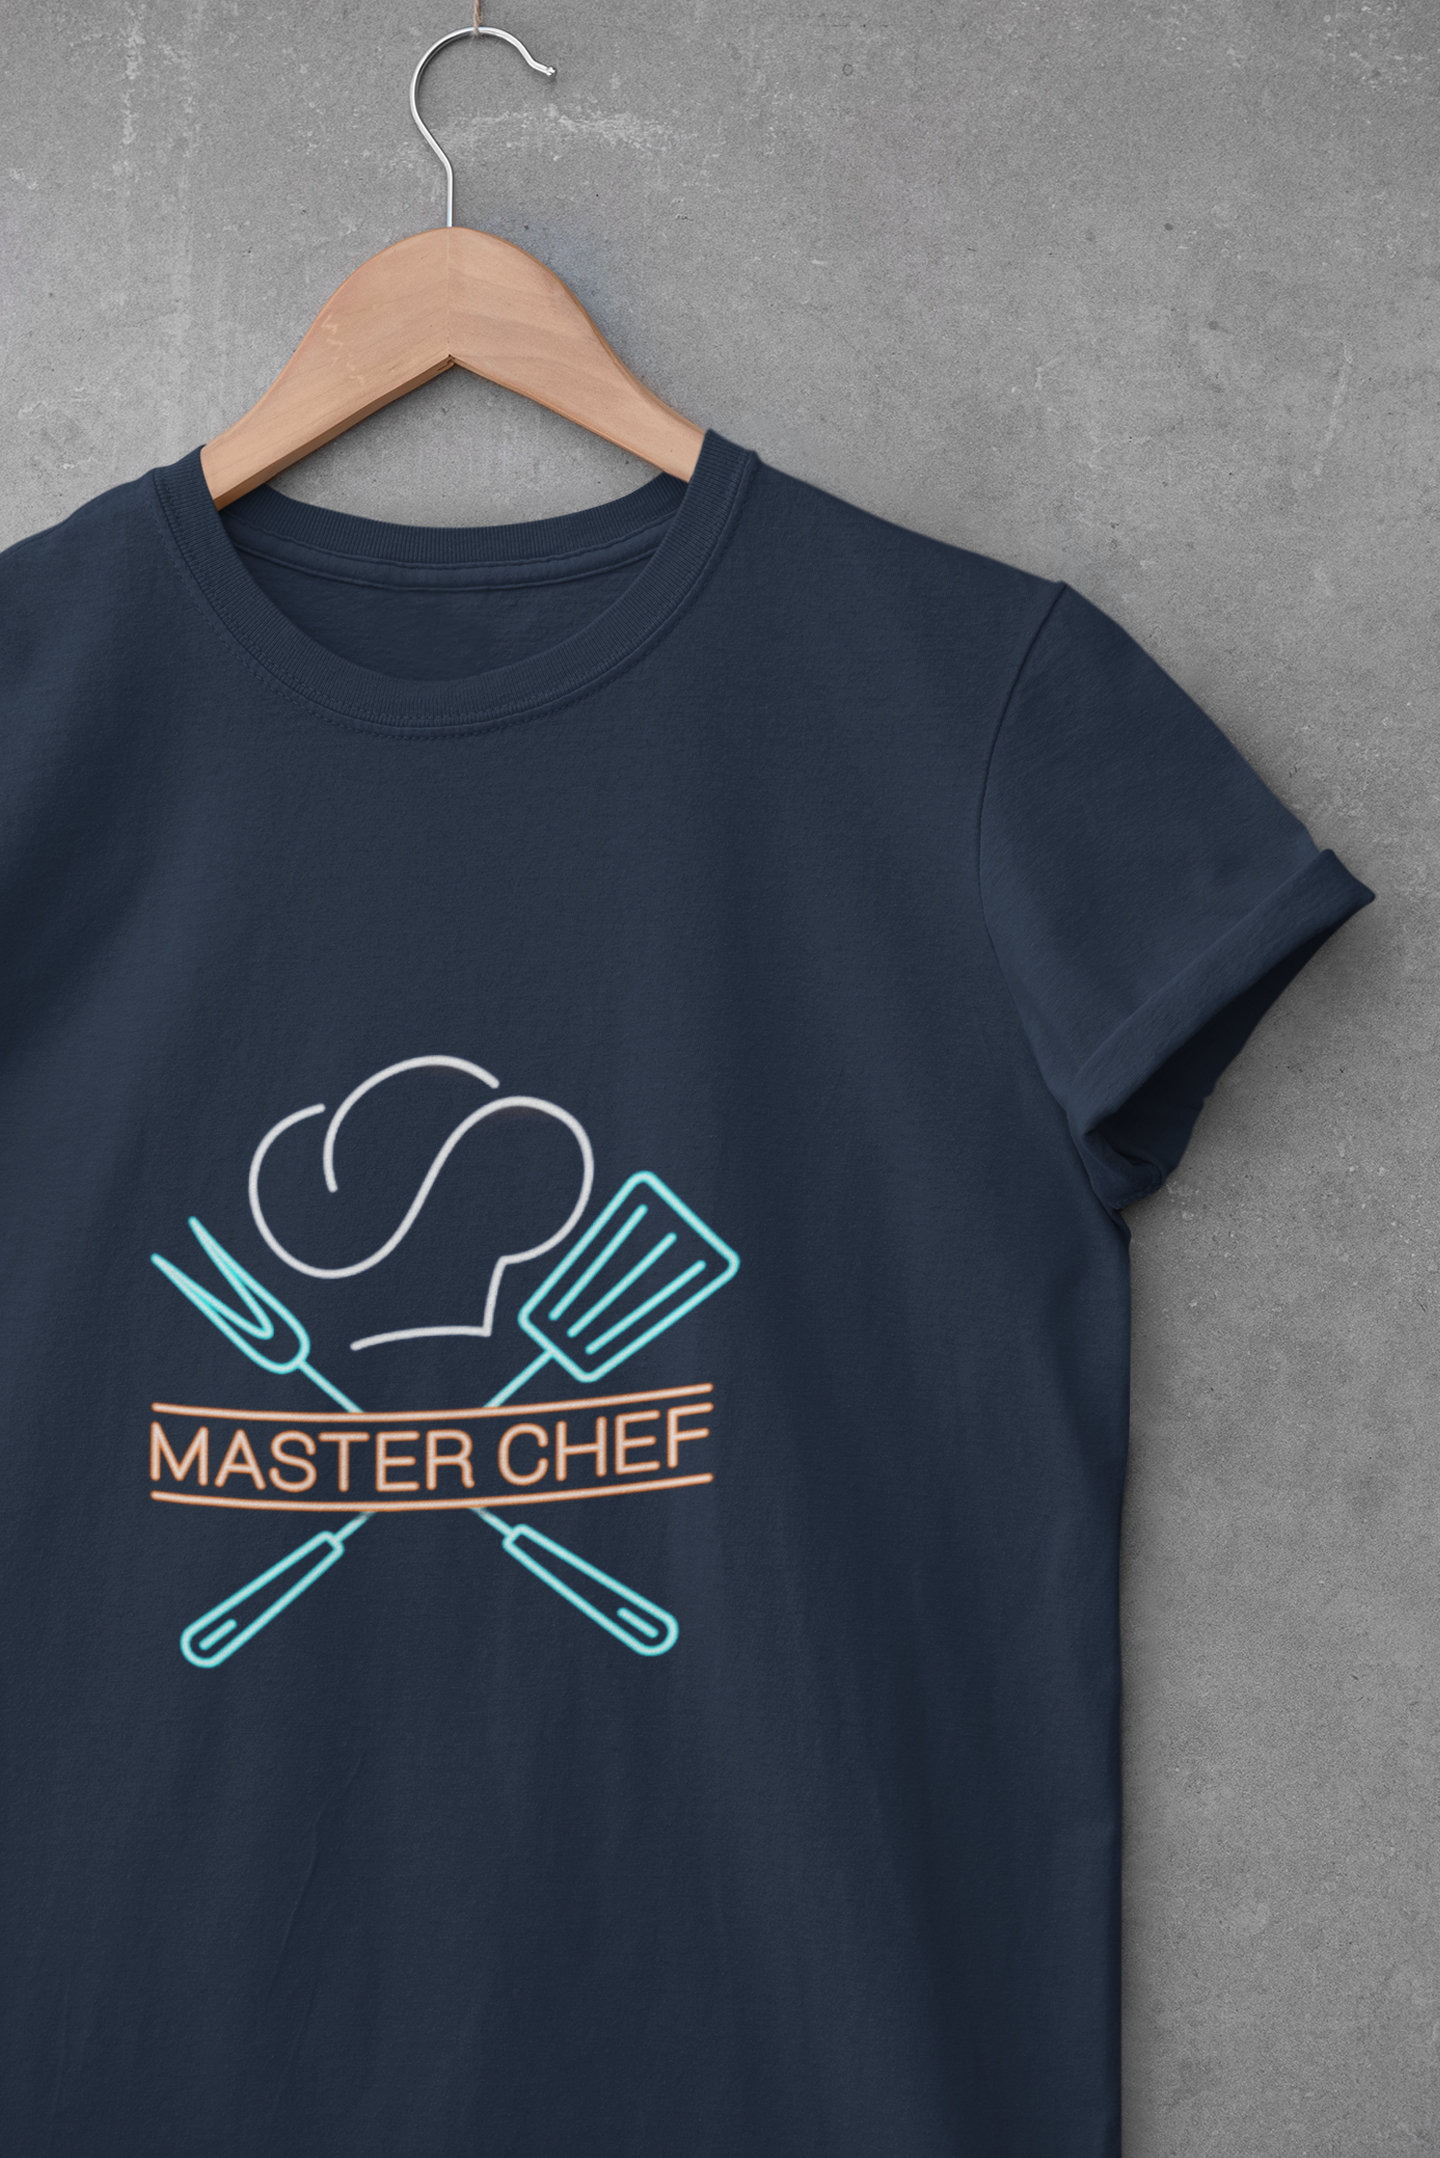 Master Chef - Tee